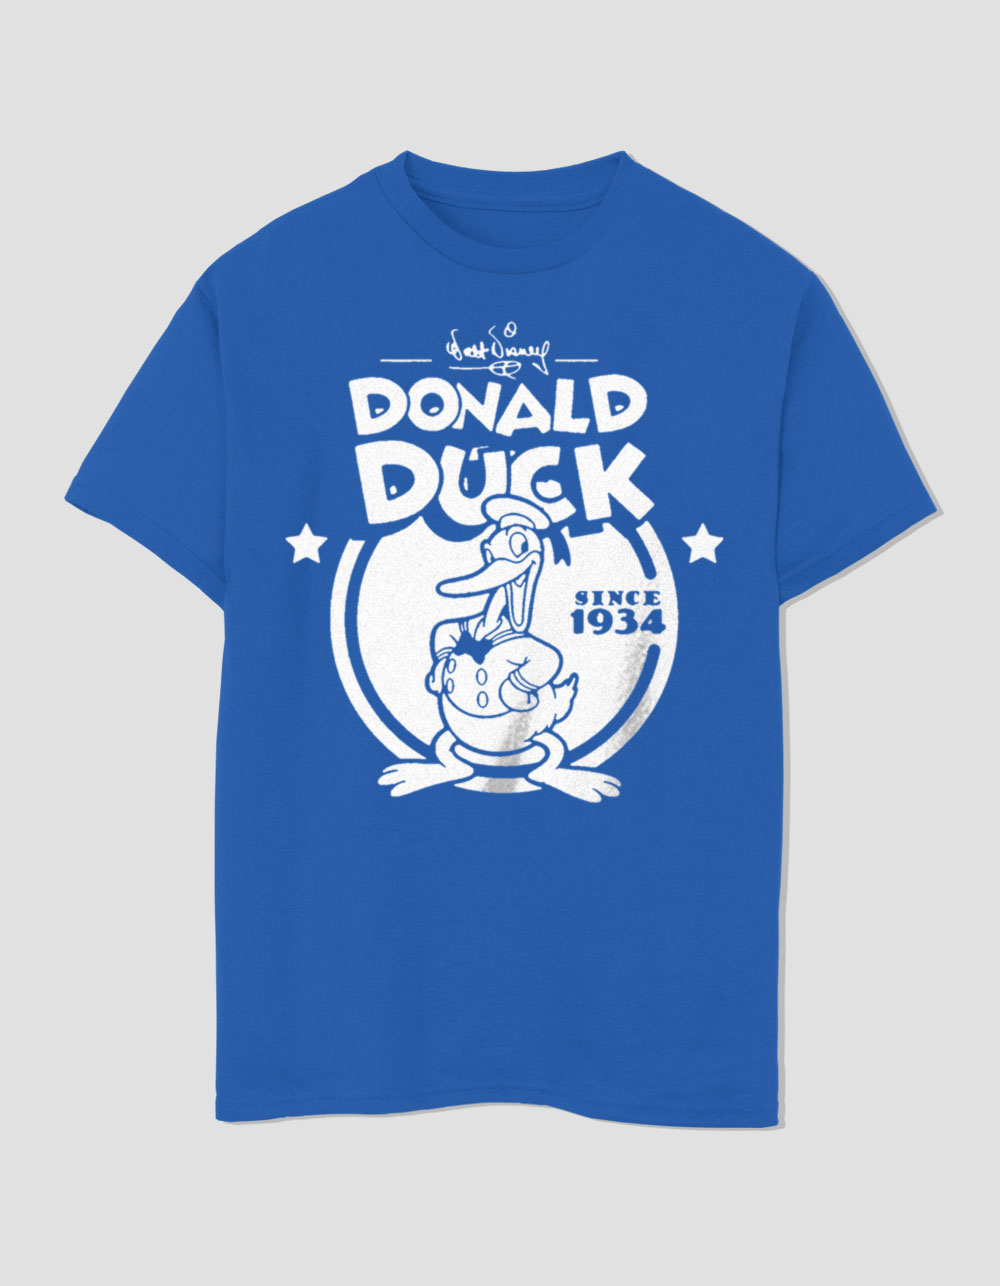 DISNEY 100TH ANNIVERSARY Since \'34 Donald Duck Unisex Kids Tee - ROYAL |  Tillys